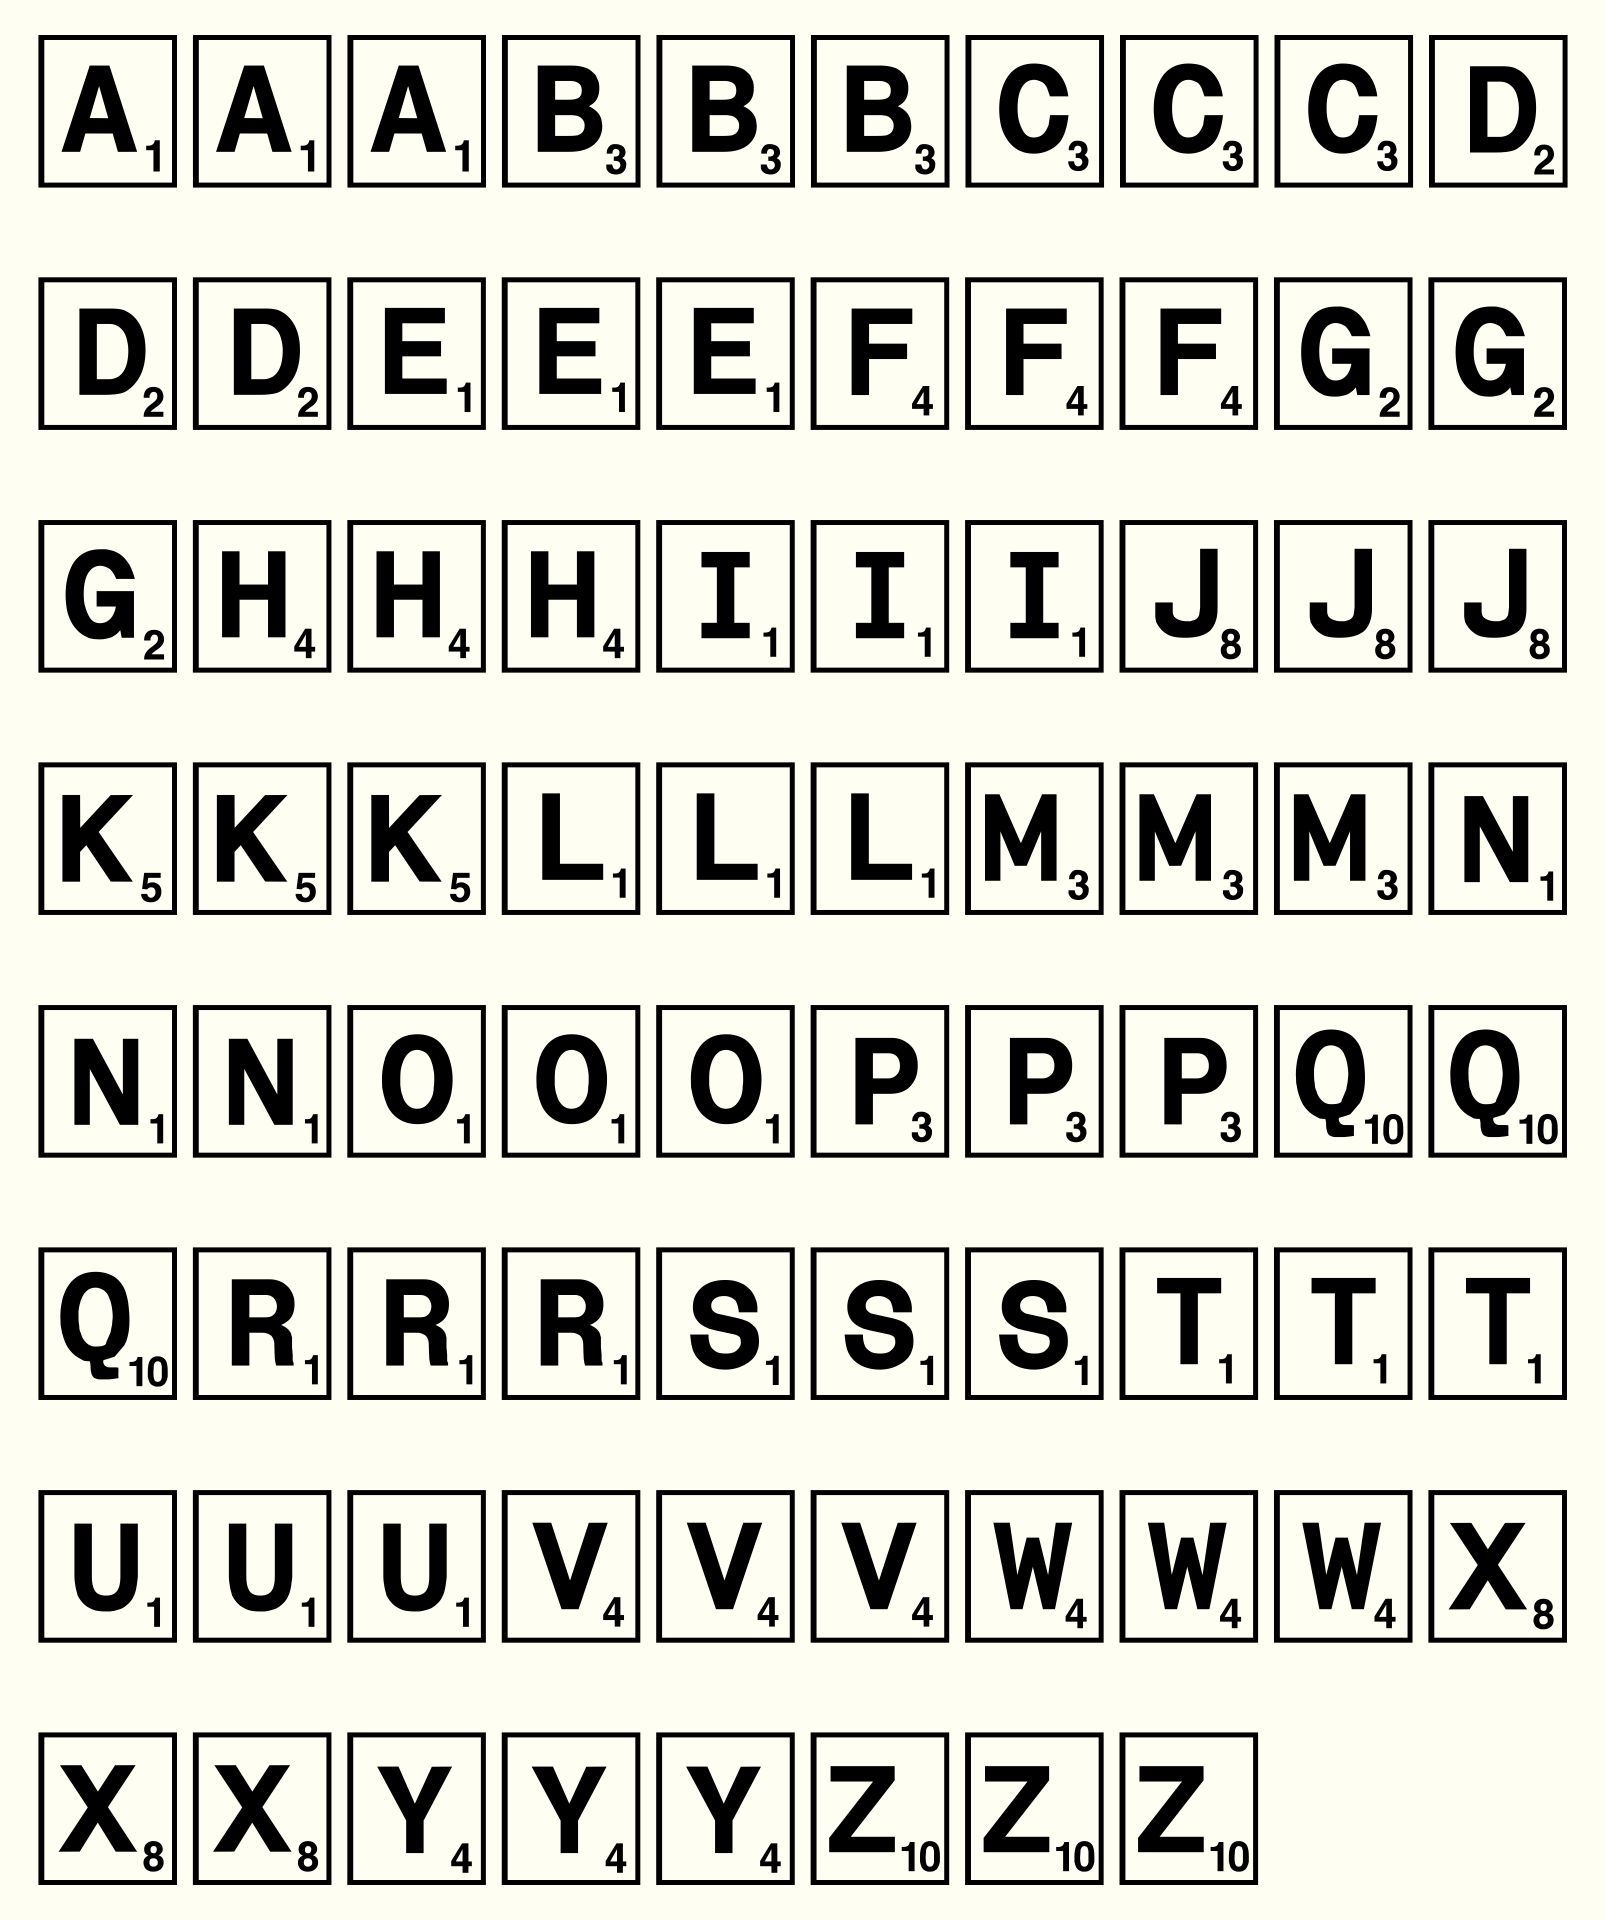 Printable Scrabble Letters Printable Scrabble Tiles Scrabble Tiles Scrabble